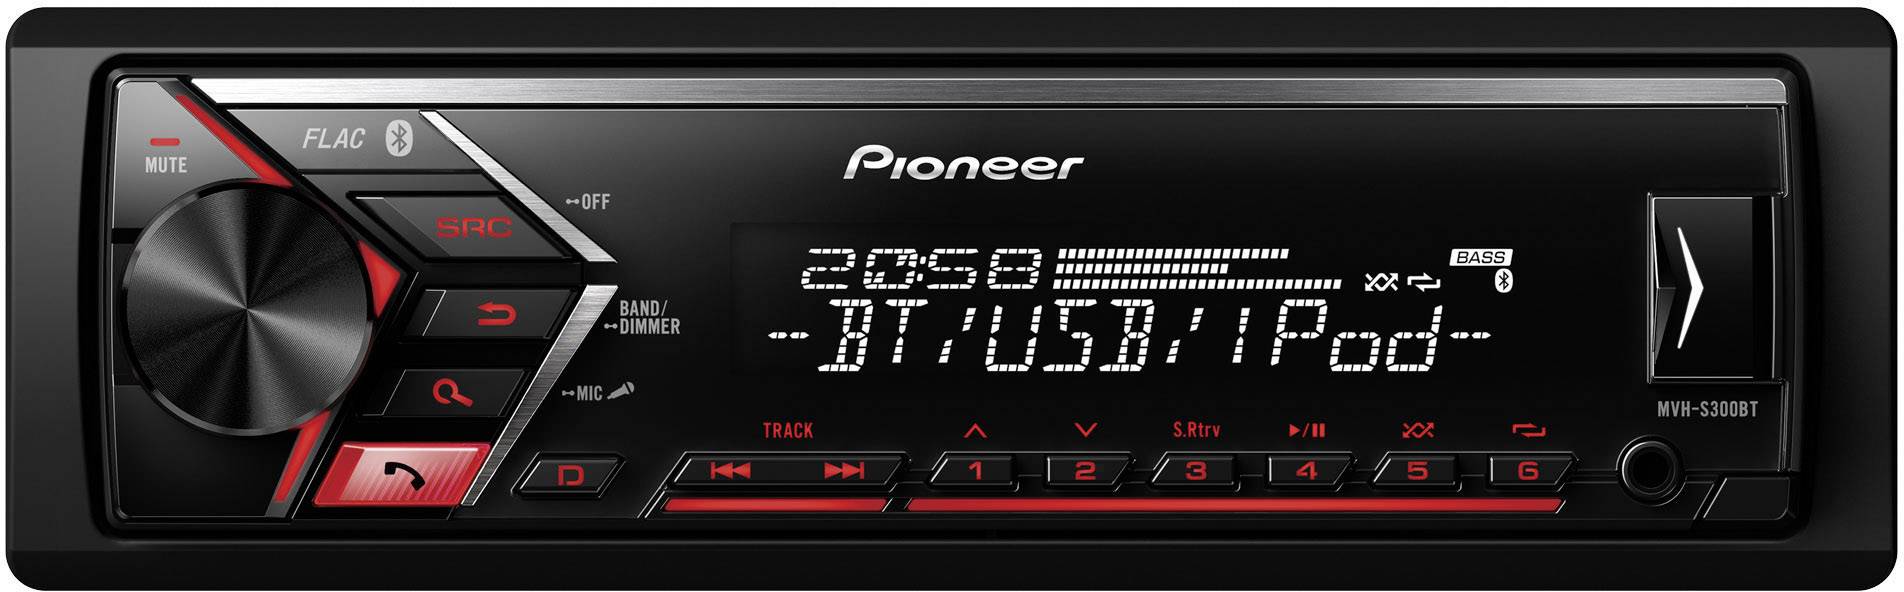 USB AUX IN MG ZT-T Autoradio Pioneer mvh-s300bt Stereo Bluetooth Handsfree Kit